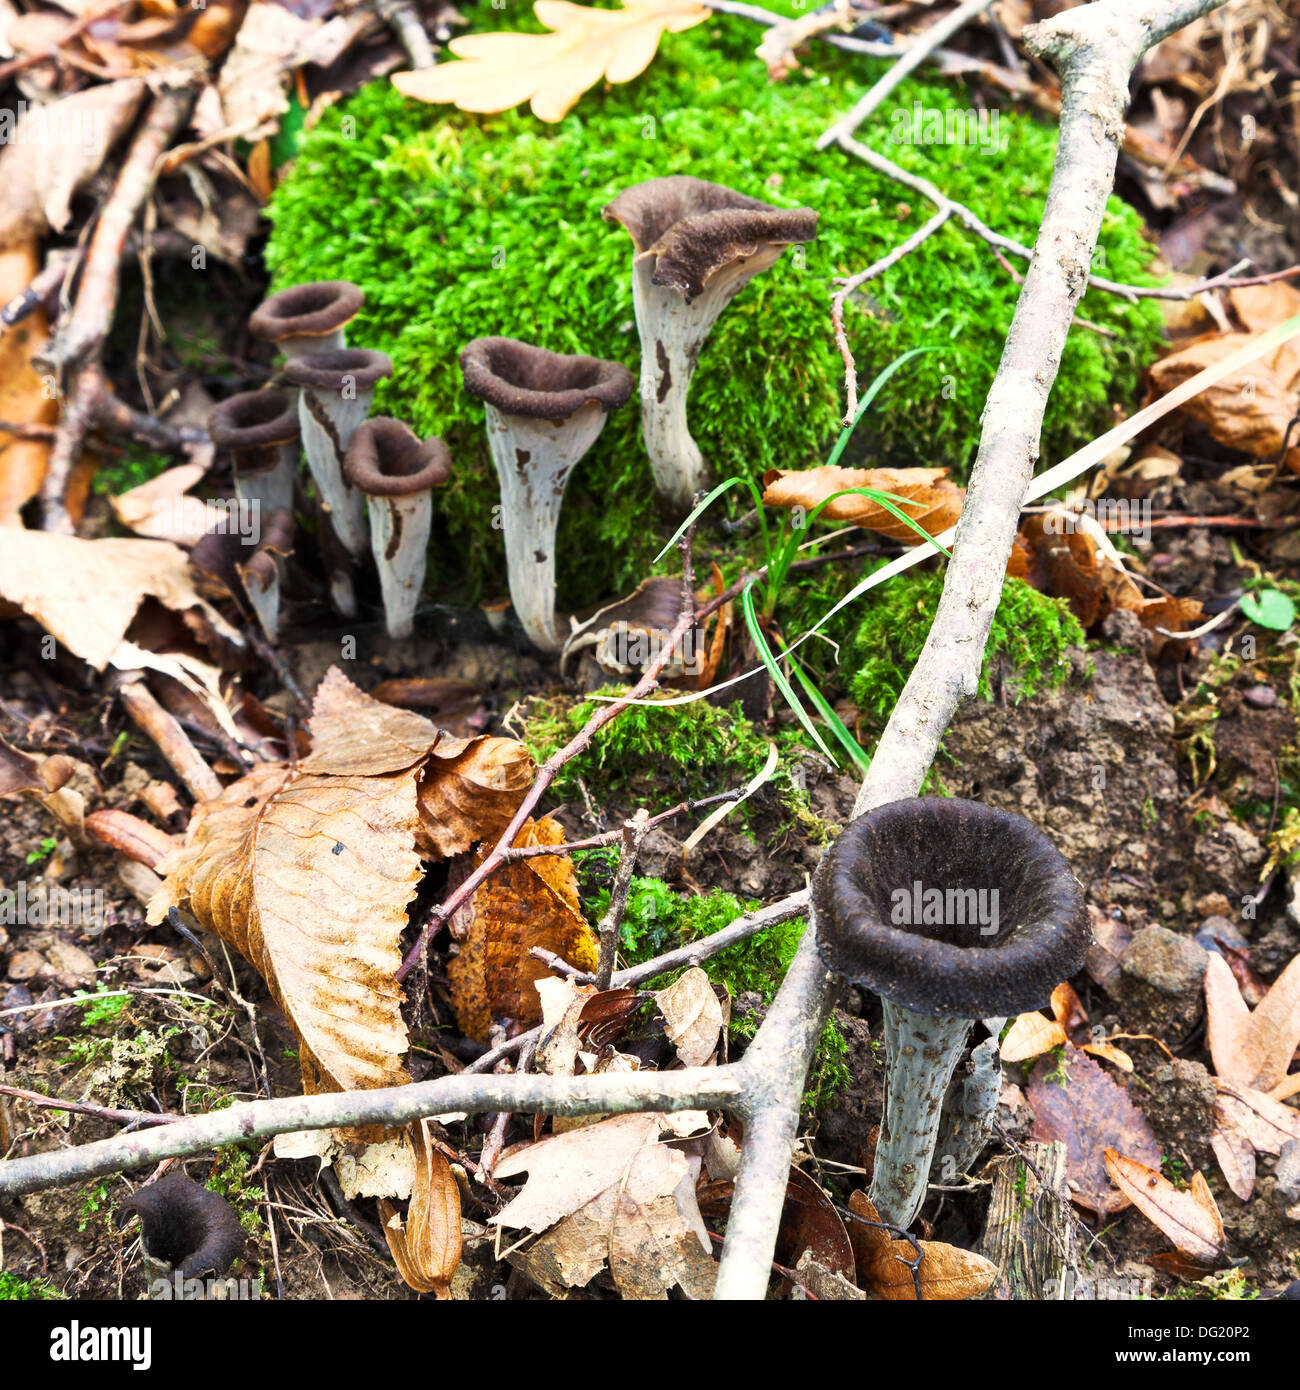 craterellus cornucopioides (black chanterelle) mushrooms in autumn litter Stock Photo